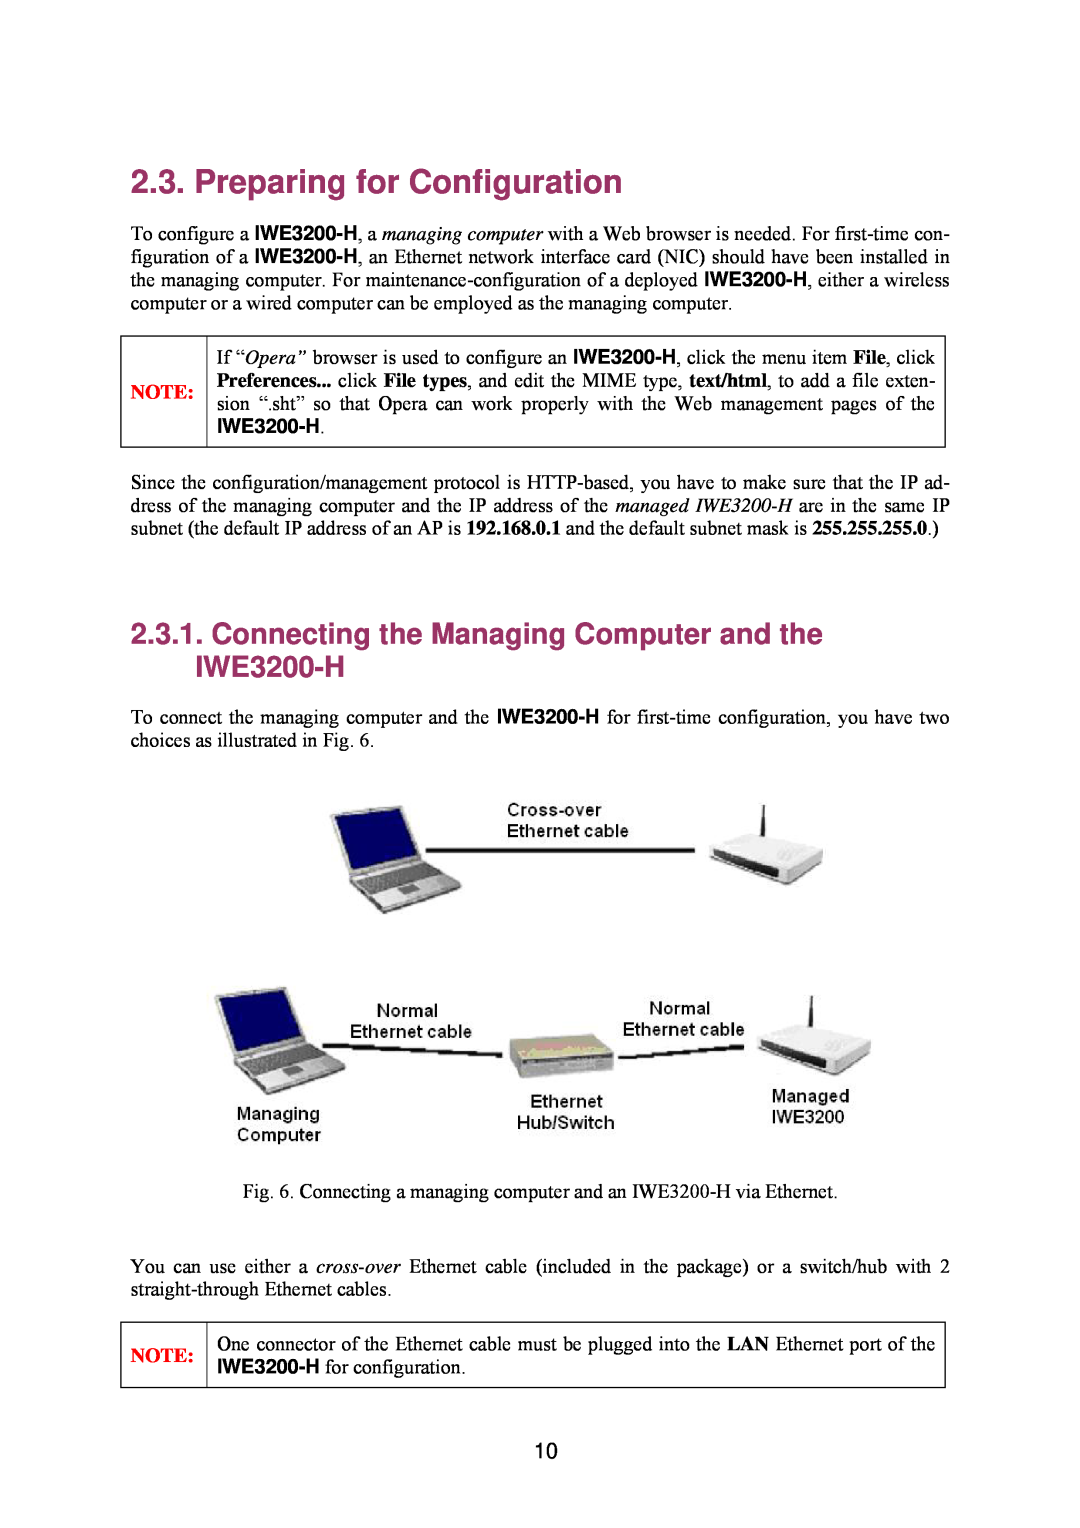 Epson IWE3200-H manual Preparing for Configuration 